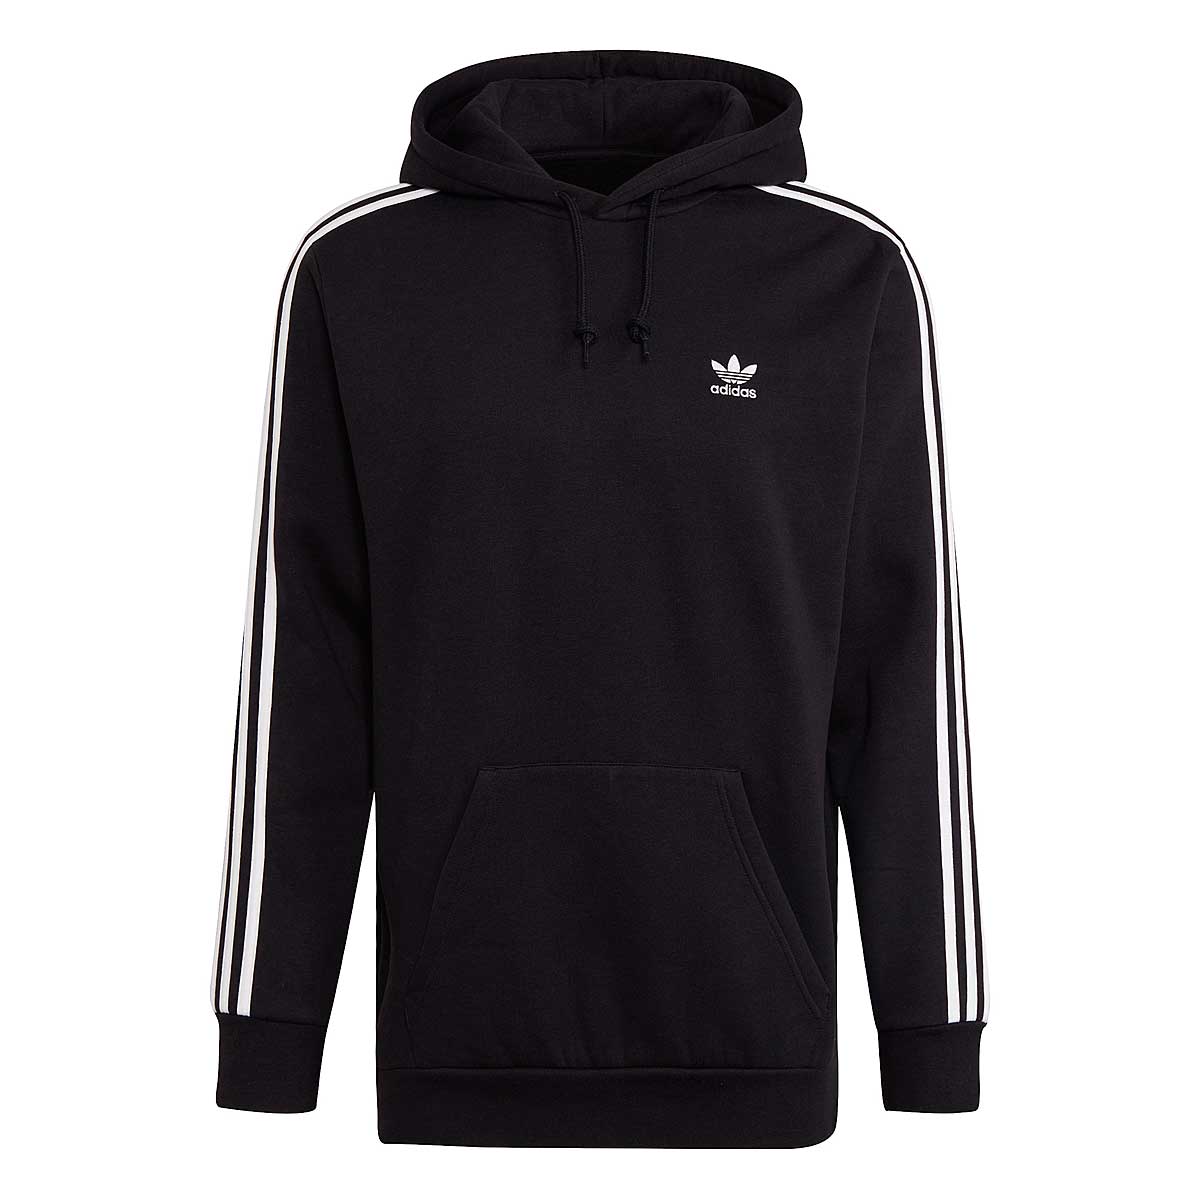 Adidas Originals 3-Stripes Hoody, Black